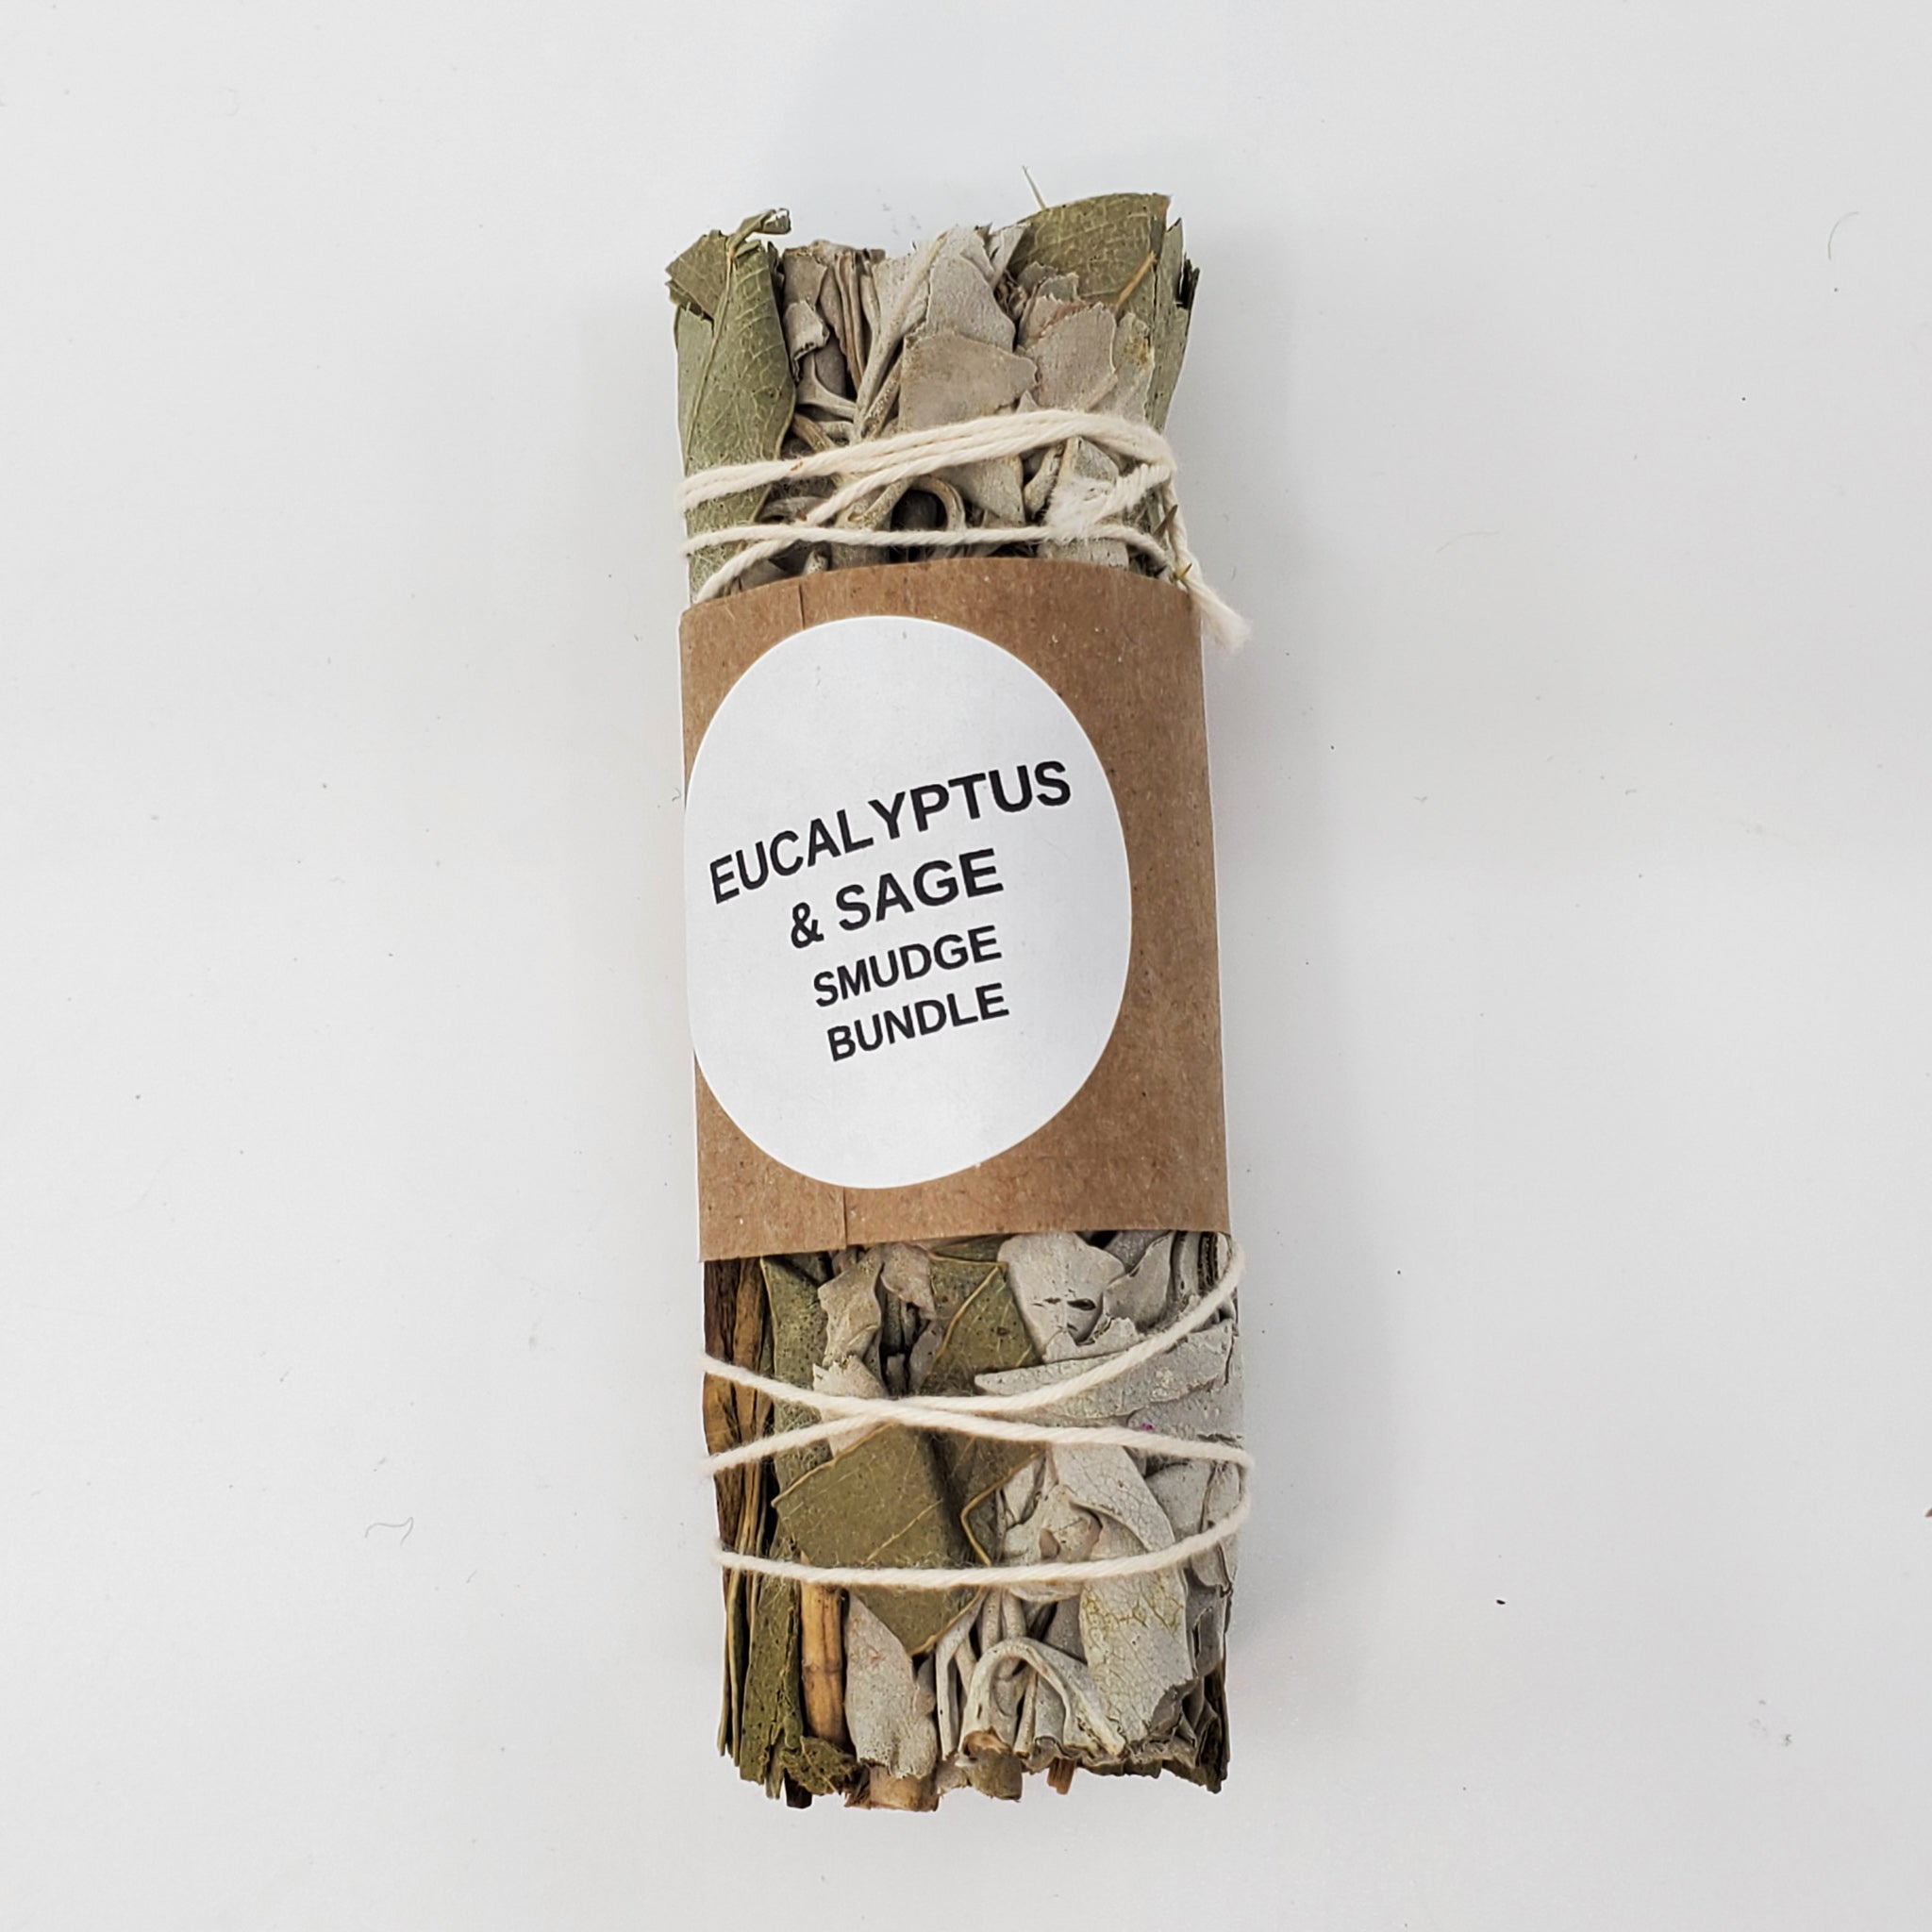 Eucalyptus & Sage Smudge Stick - The Mockingbird Apothecary & General Store